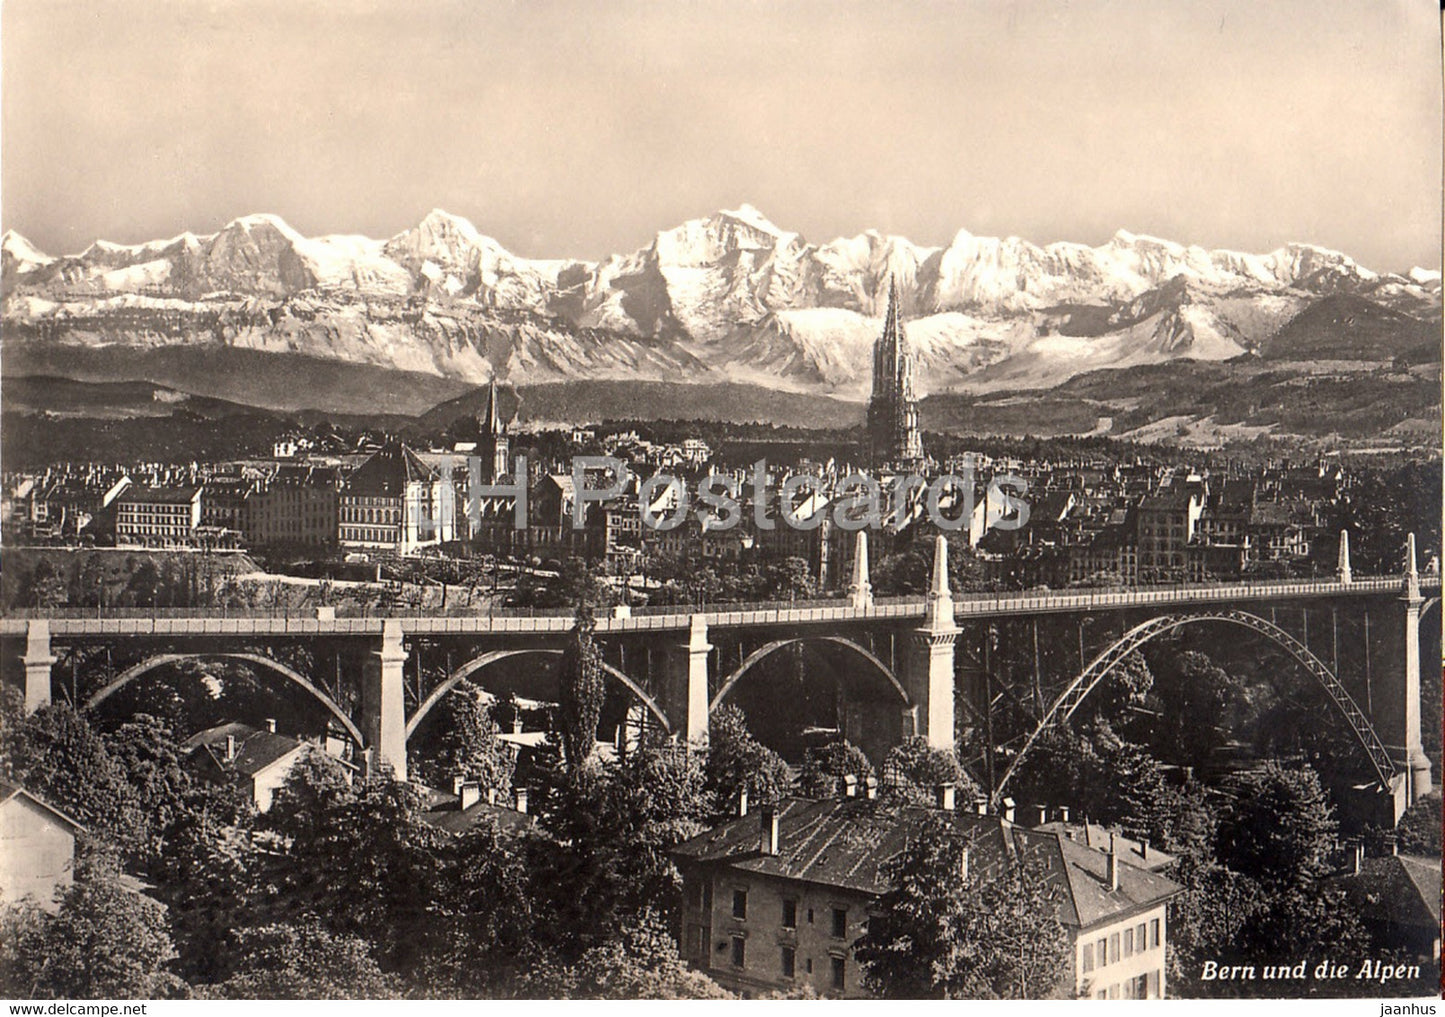 Berne et les Alpes - Bern - 6762 - old postcard - Switzerland - unused - JH Postcards